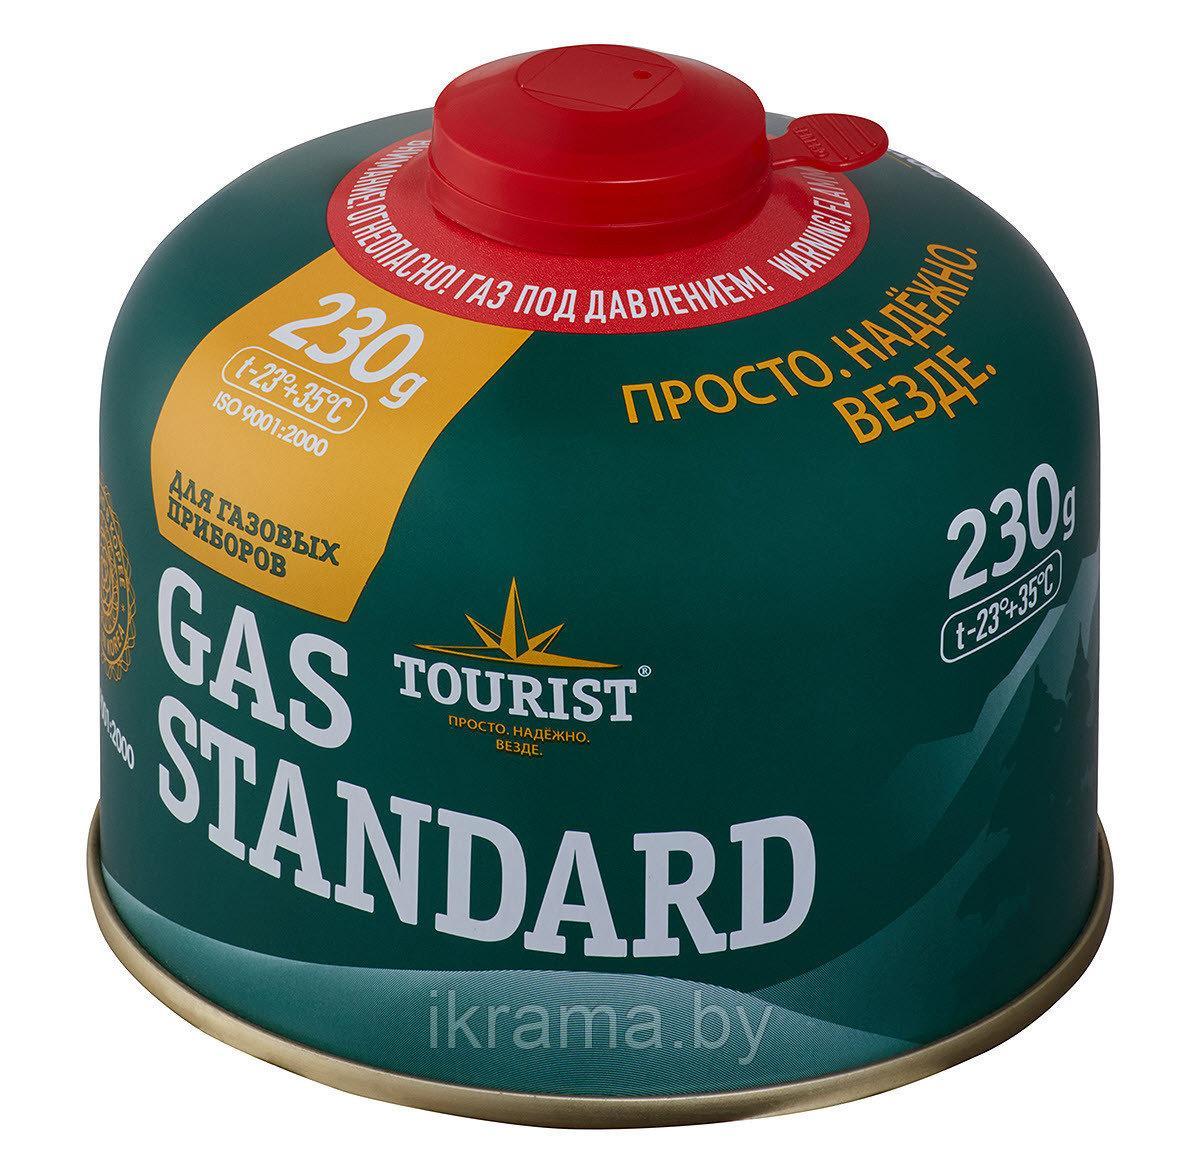 Газовый баллон Standard (TBR-230) 230 г.